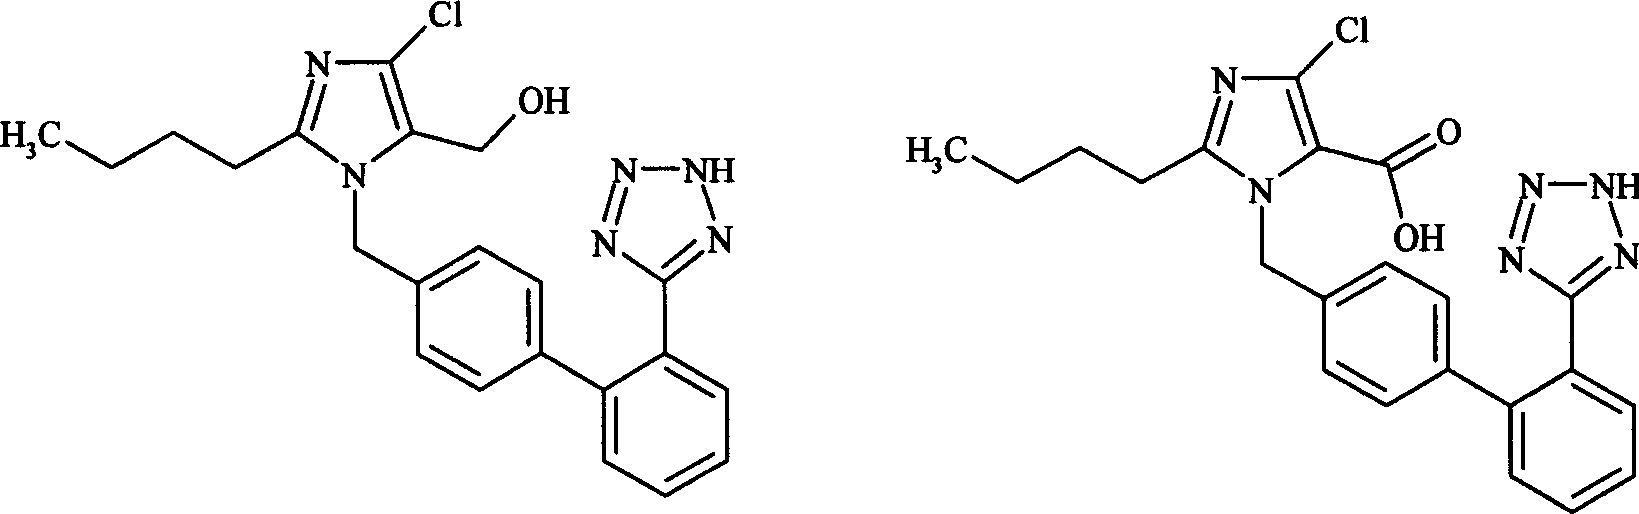 Prepn process of 5-losartan carboxylate